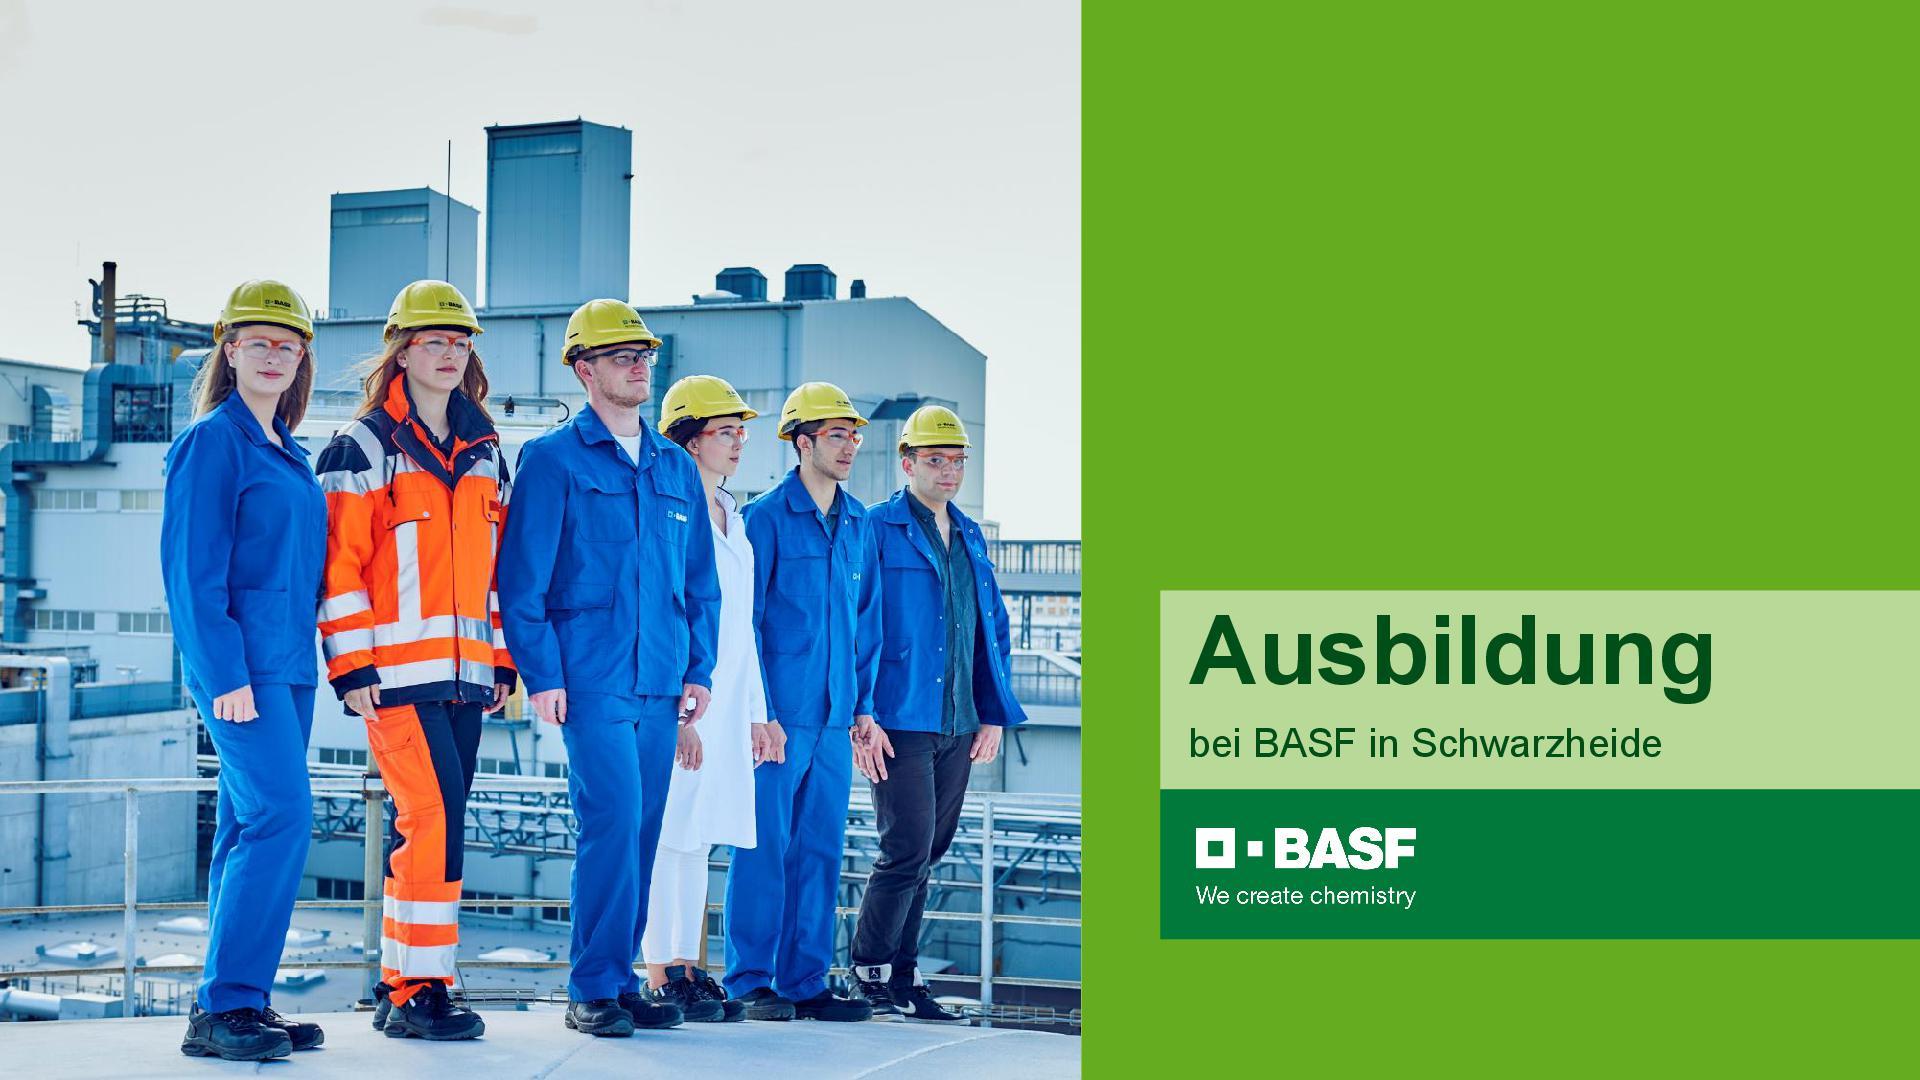 BASF - Ausbildung bei BASF Schwarzheide